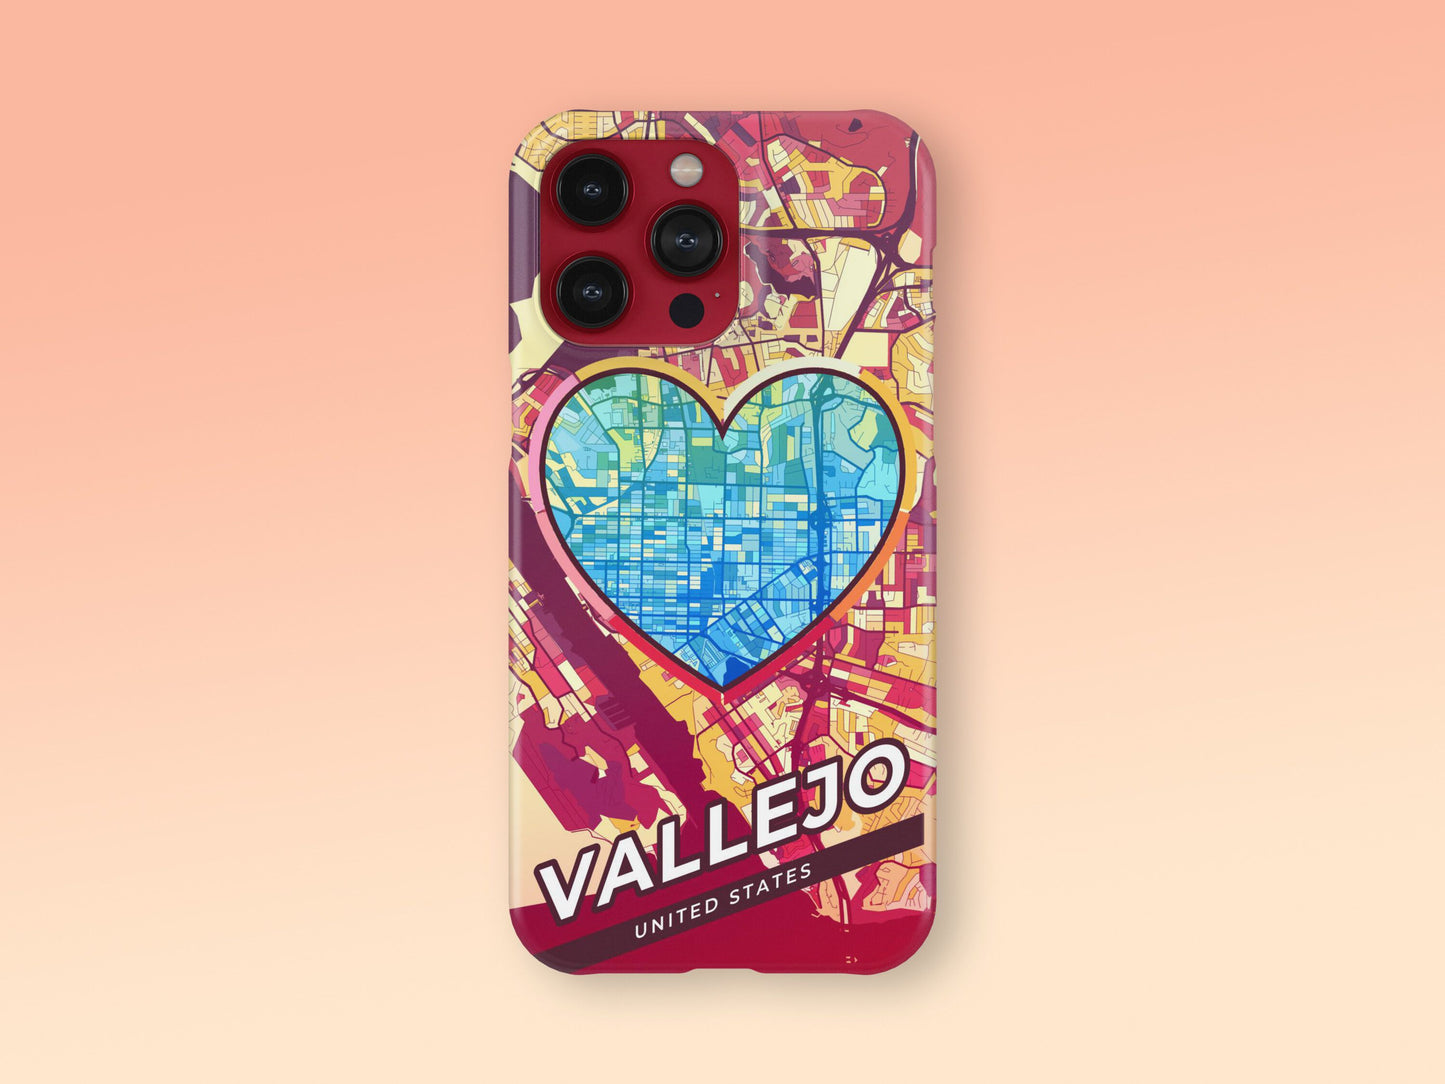 Vallejo California slim phone case with colorful icon 2